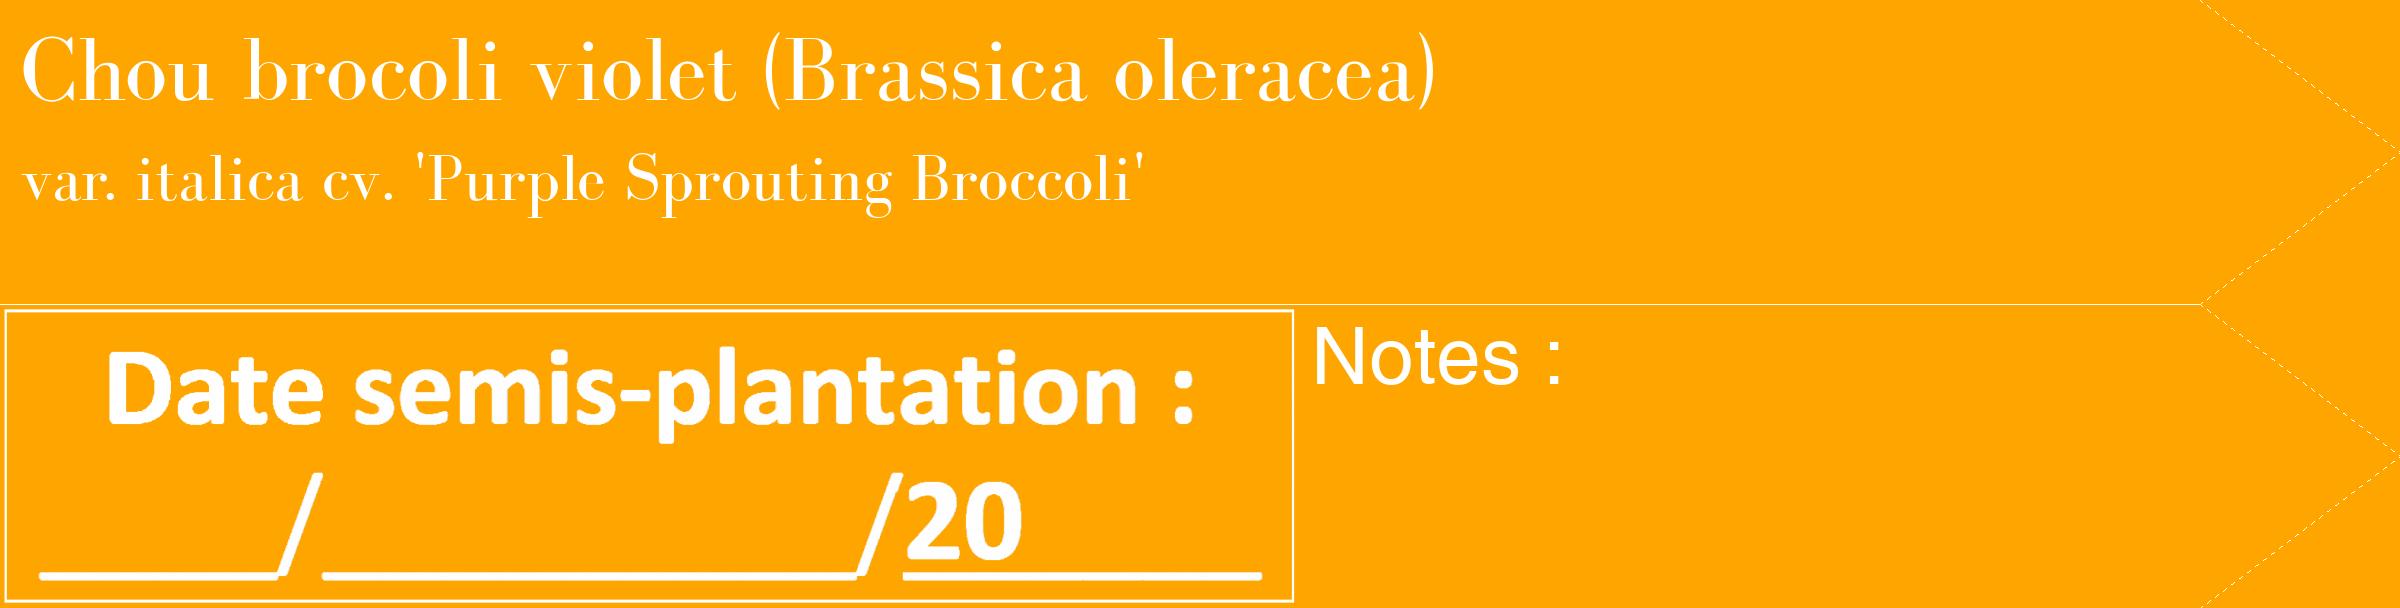 Étiquette de : Brassica oleracea var. italica cv. 'Purple Sprouting Broccoli' - format c - style blanche22_simple_simplebod avec comestibilité